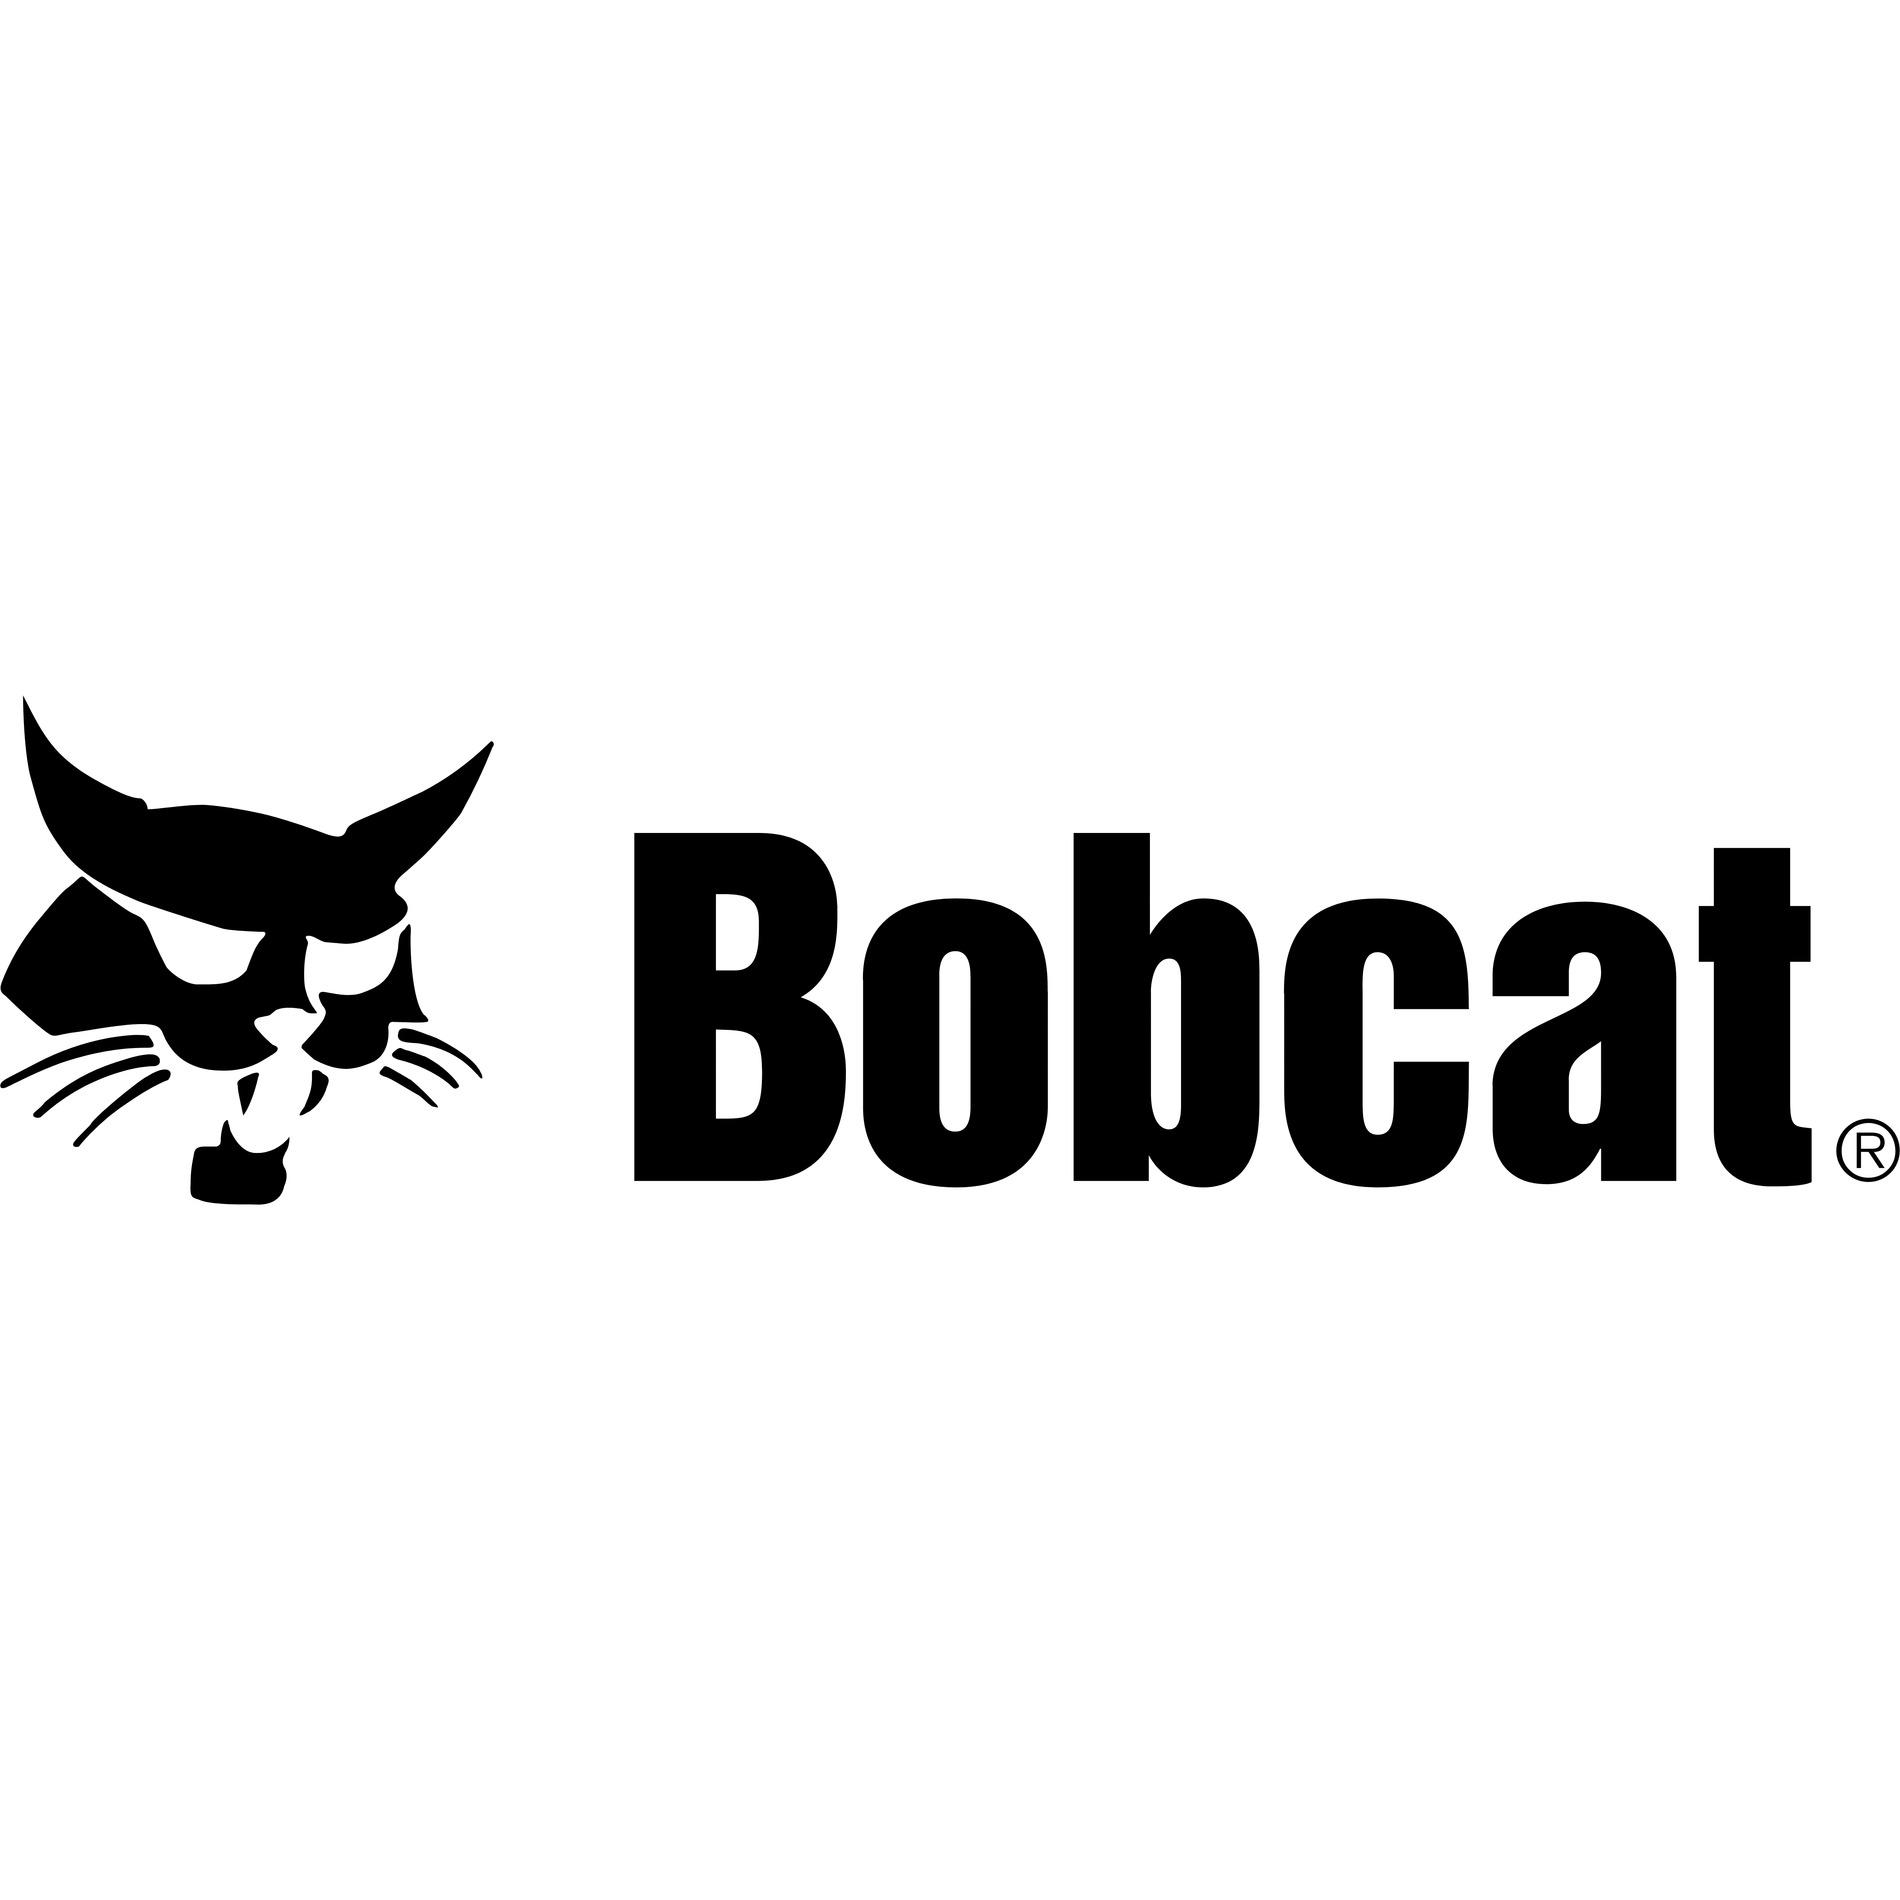 Bobcat of Toronto